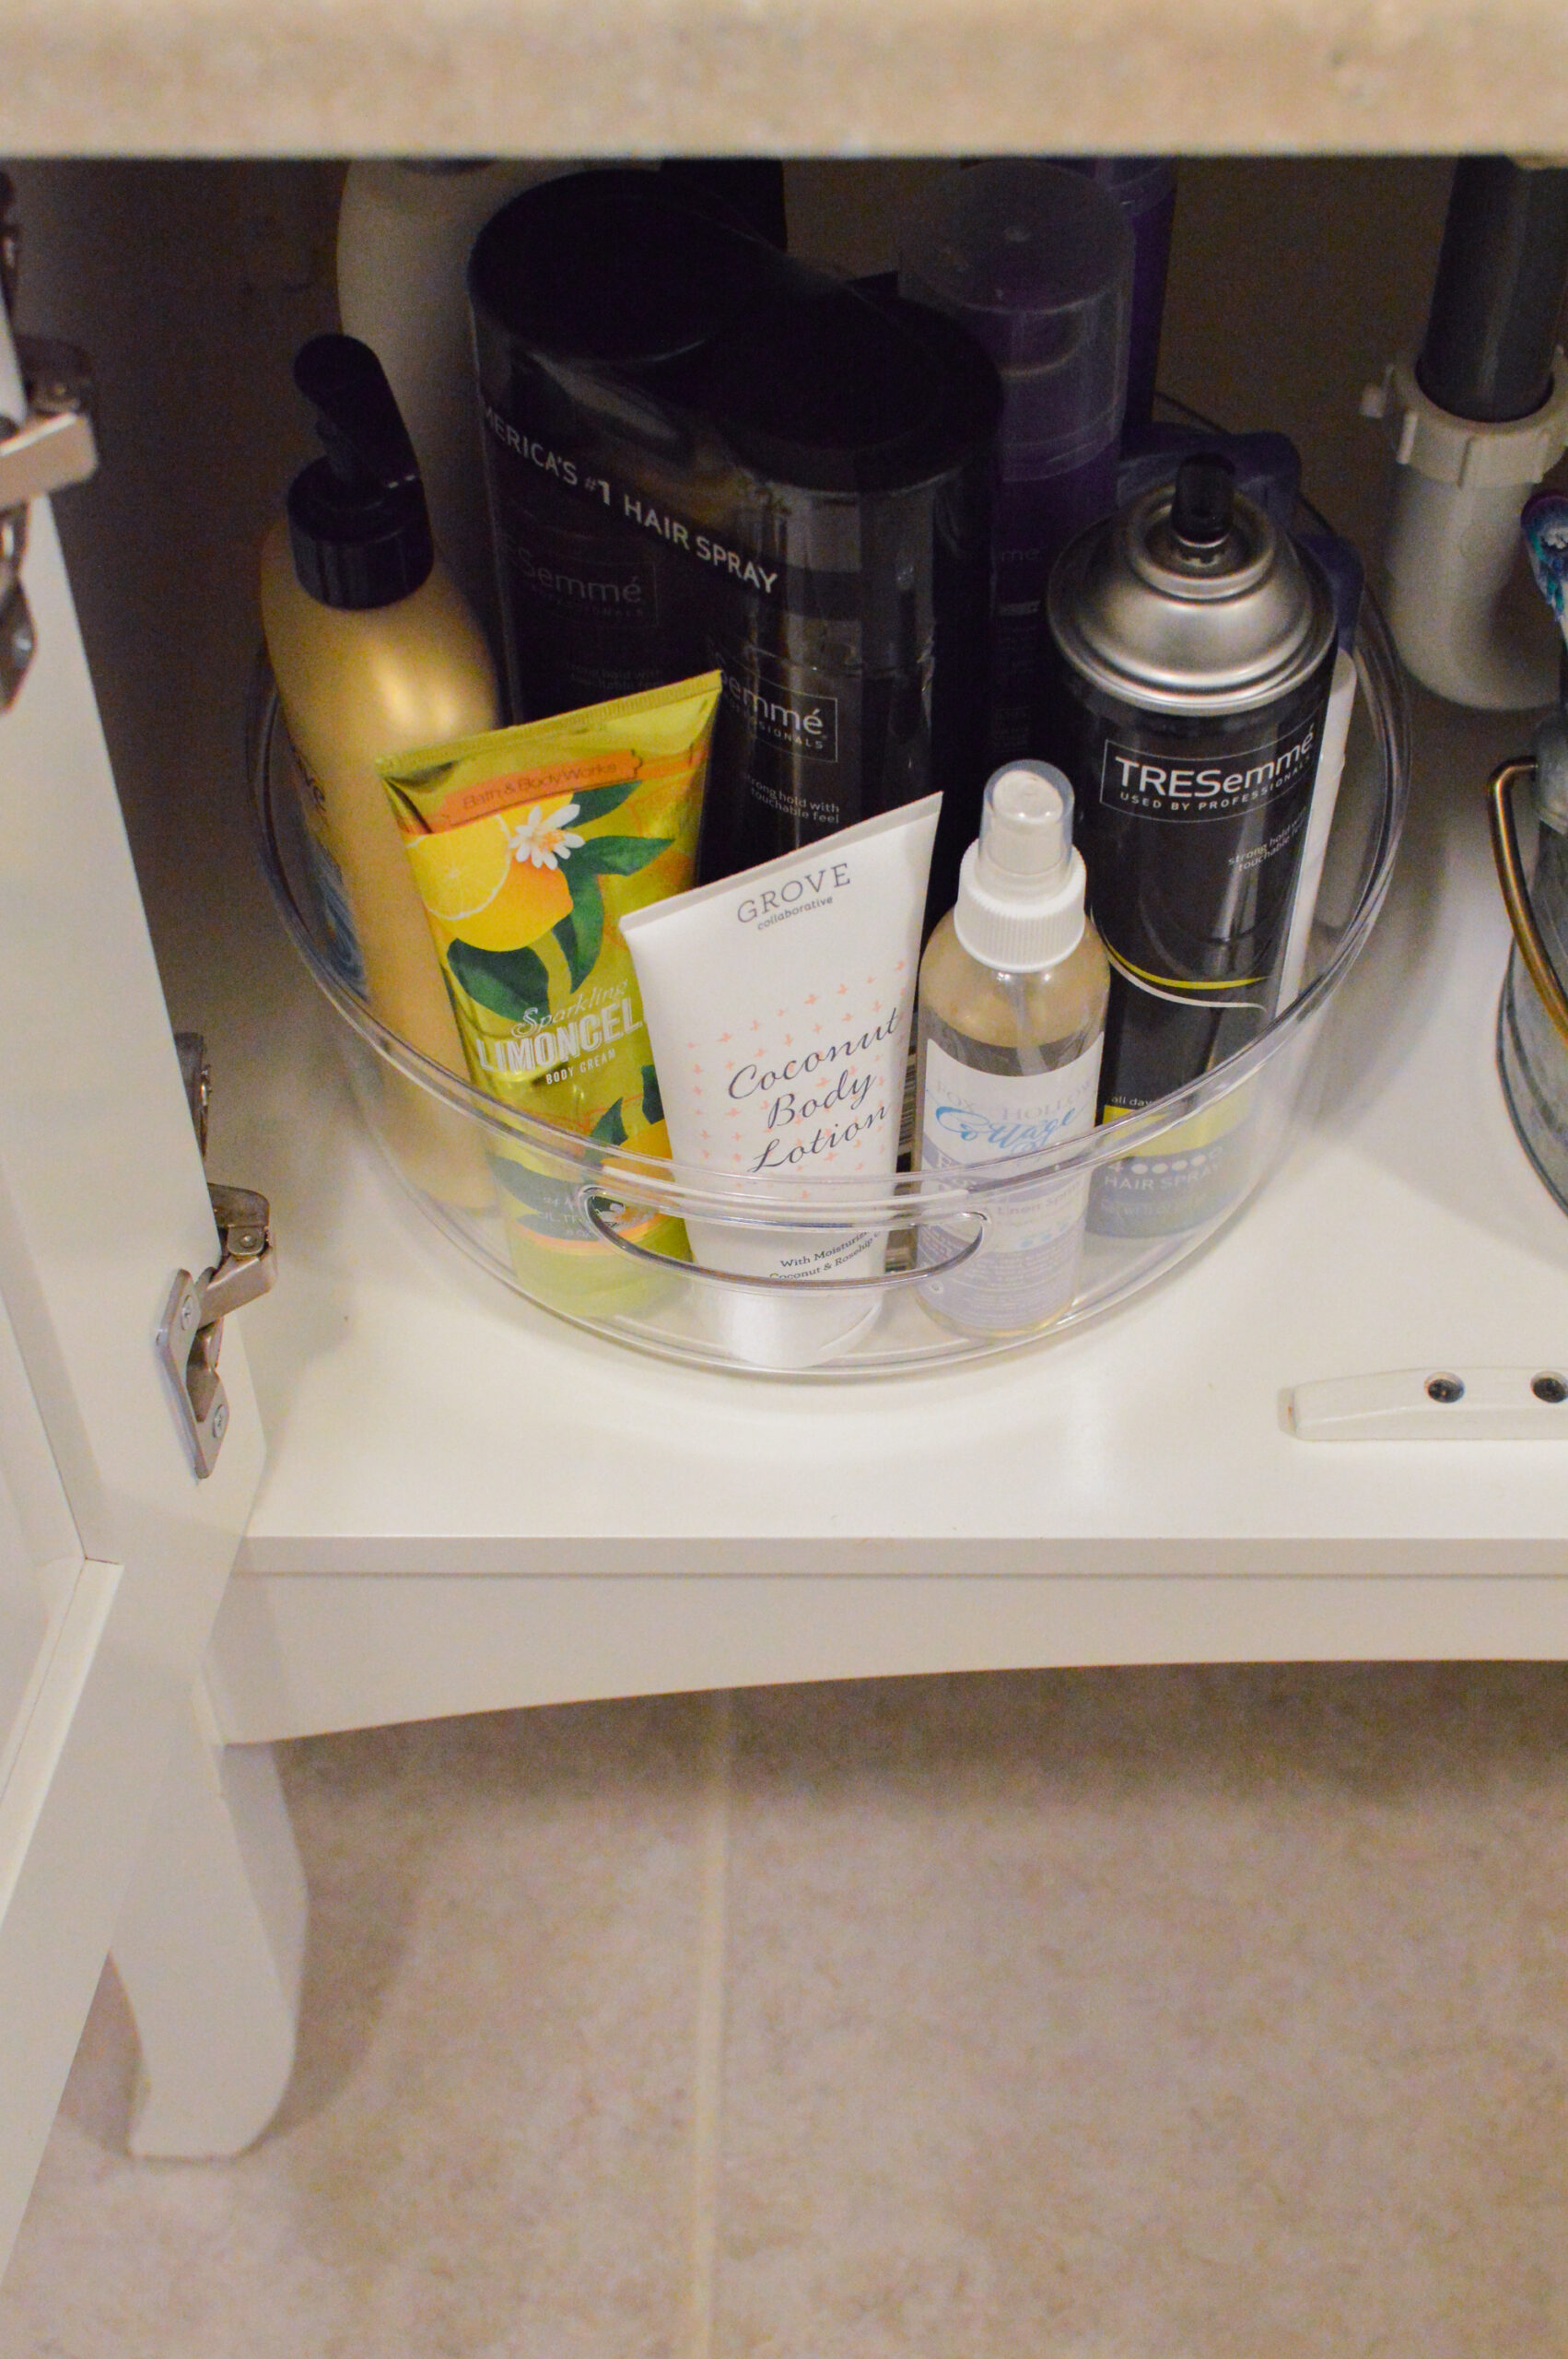 5 Secrets To Bathroom Under Sink Storage - The Organized Mama